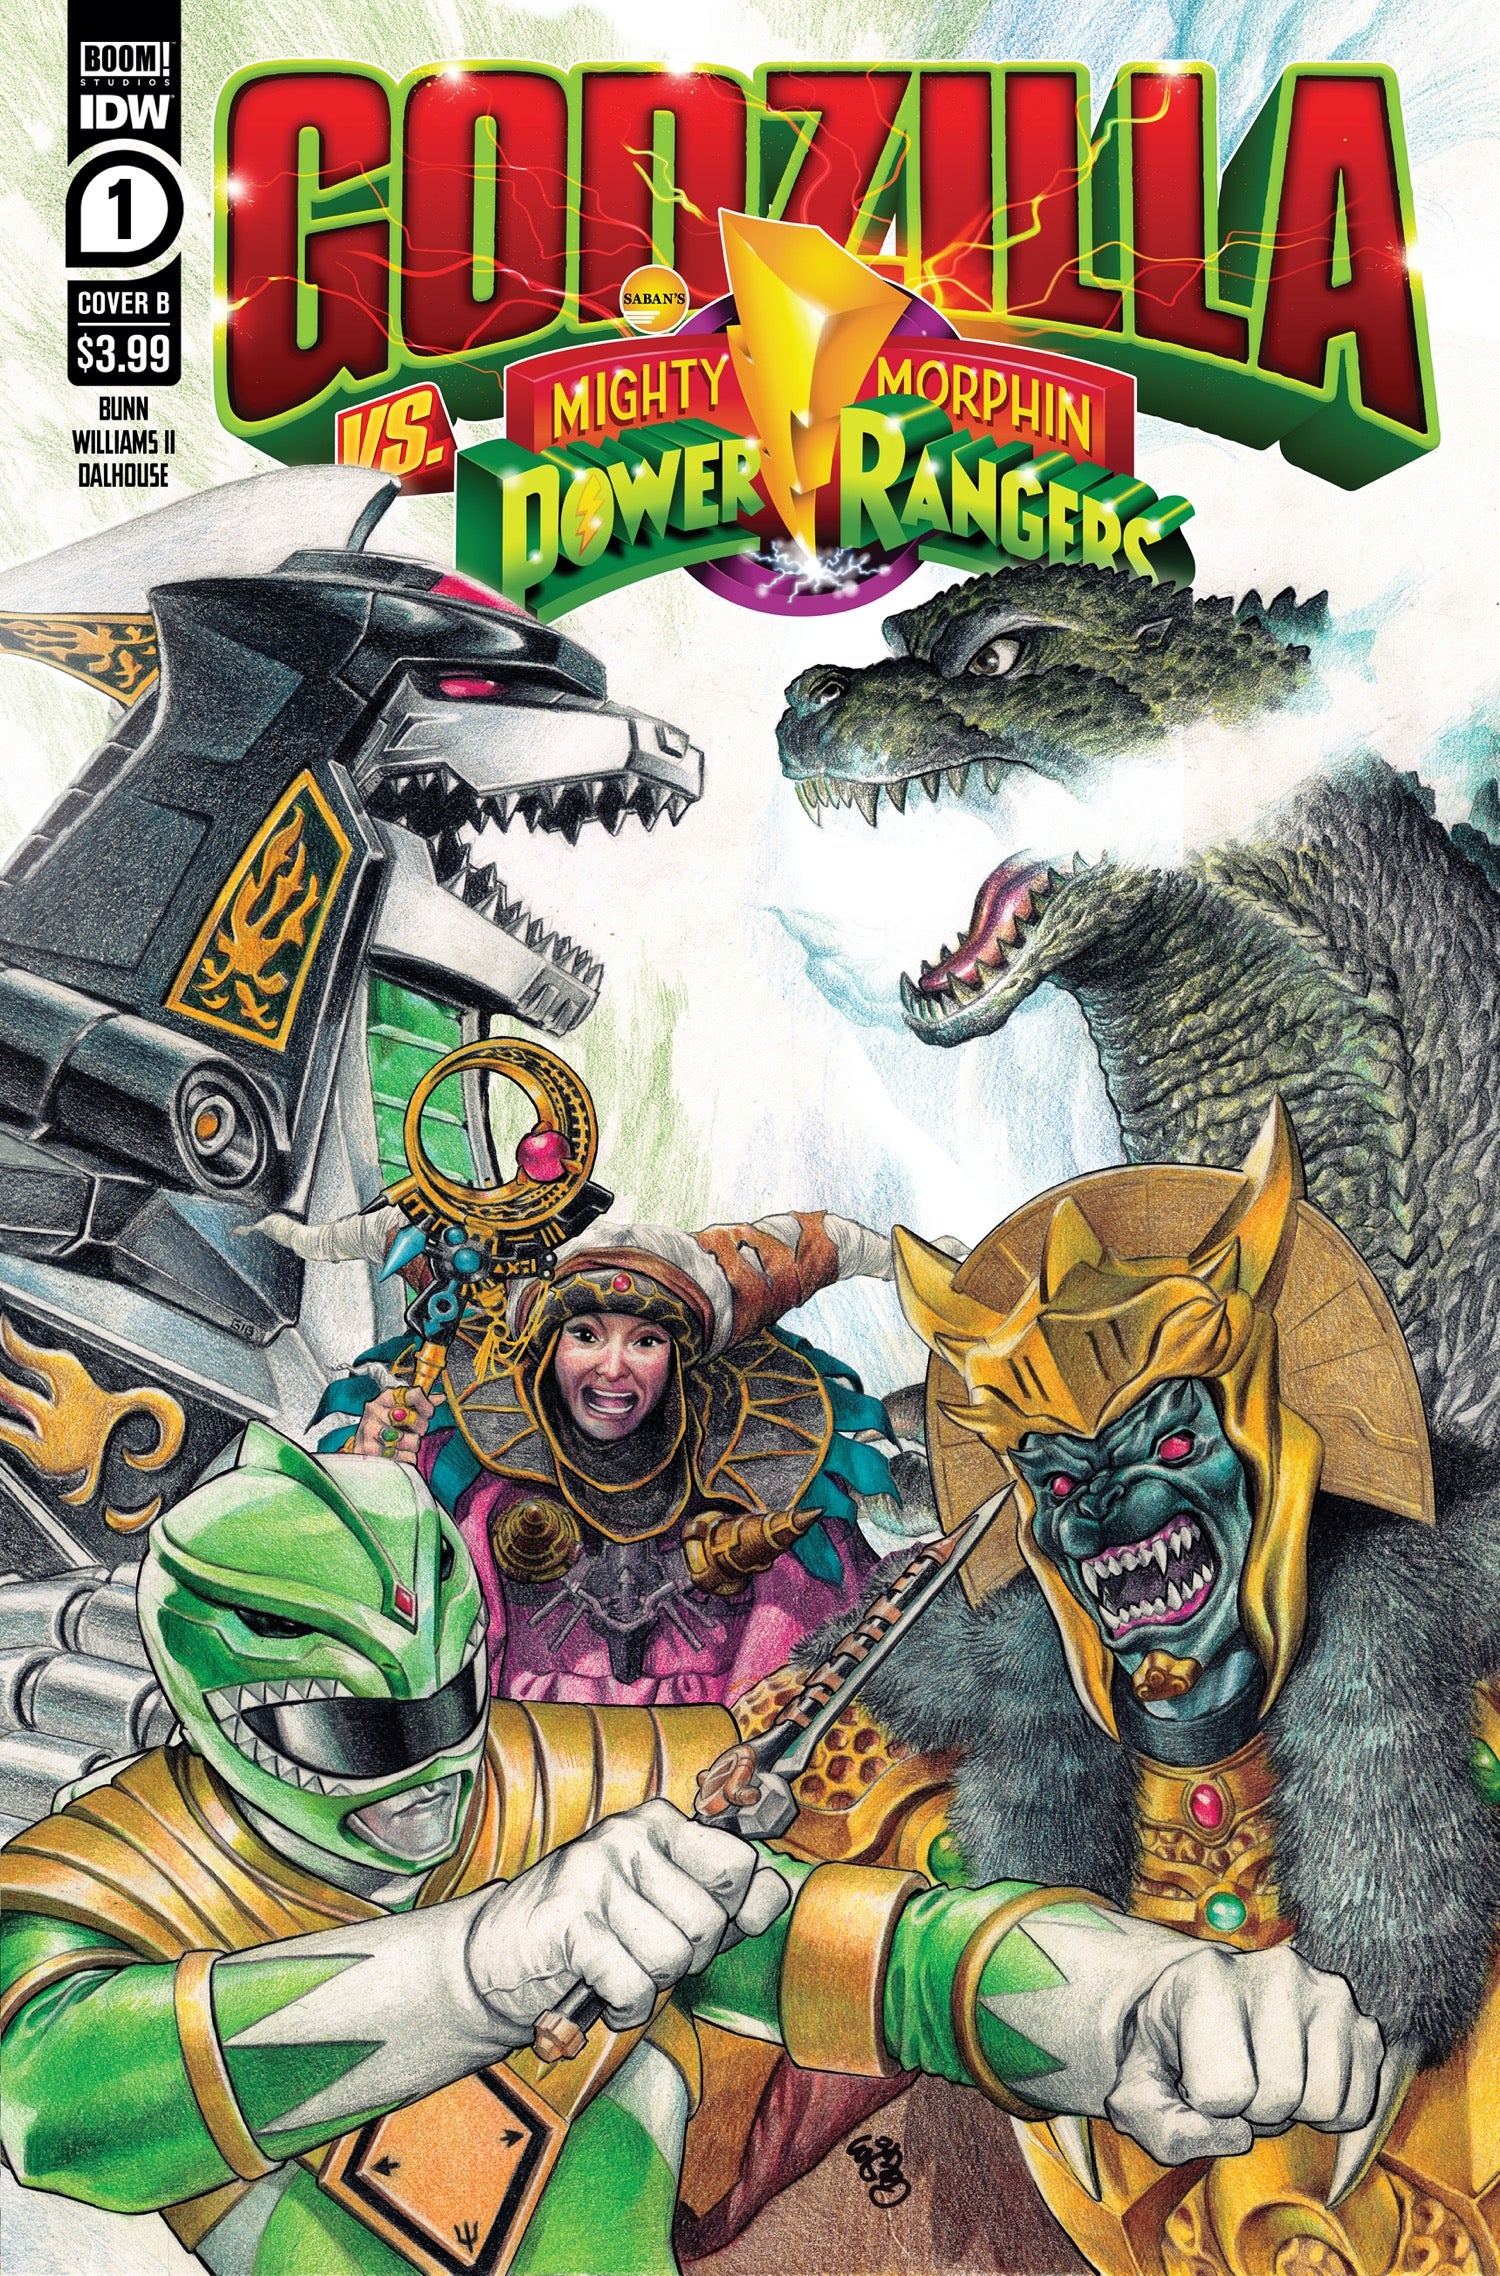 Alternate cover art of Godzilla Vs. the Mighty Morphin Power Rangers #1 by E.J. Su. (Image: IDW/Boom Studios/Toho)